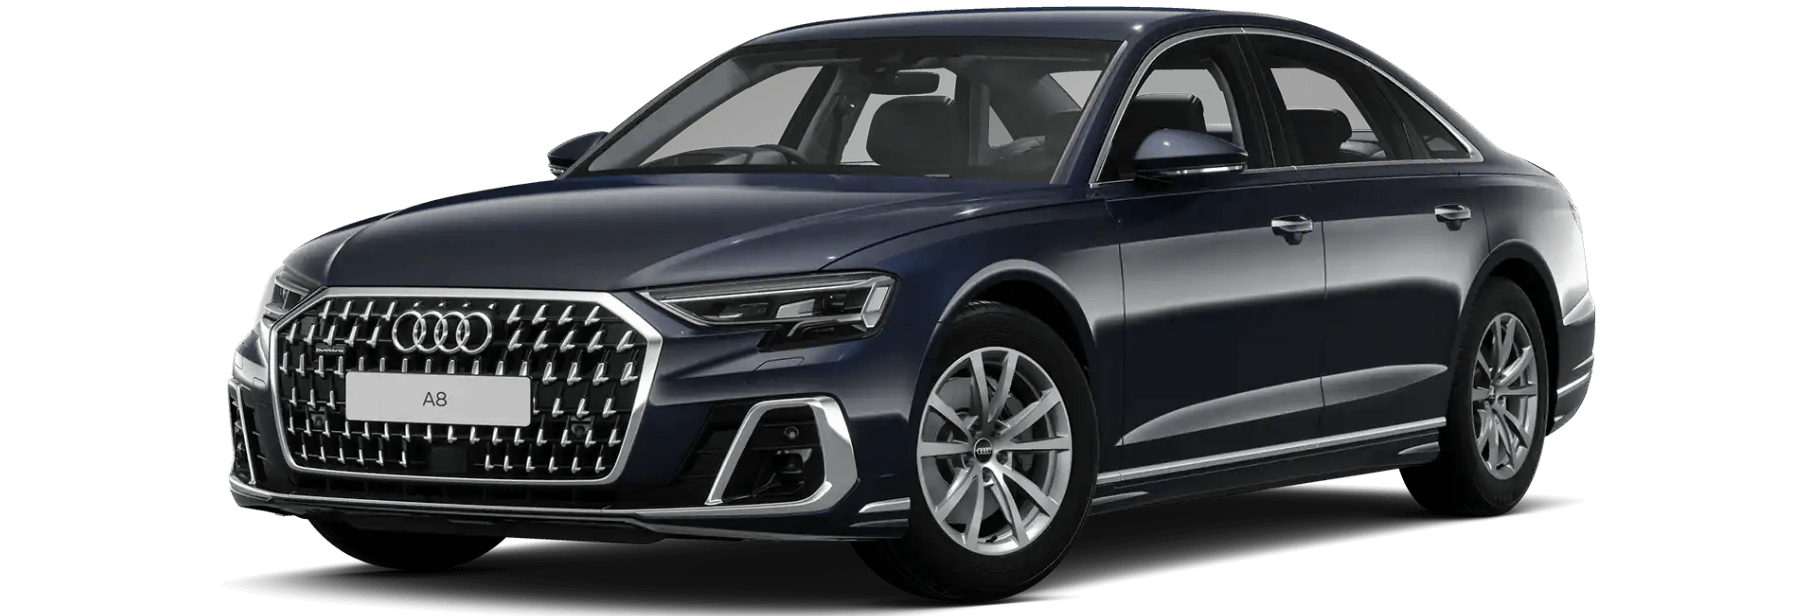 New Audi A8 | Swansea, Bridgend, Neyland | Sinclair Audi